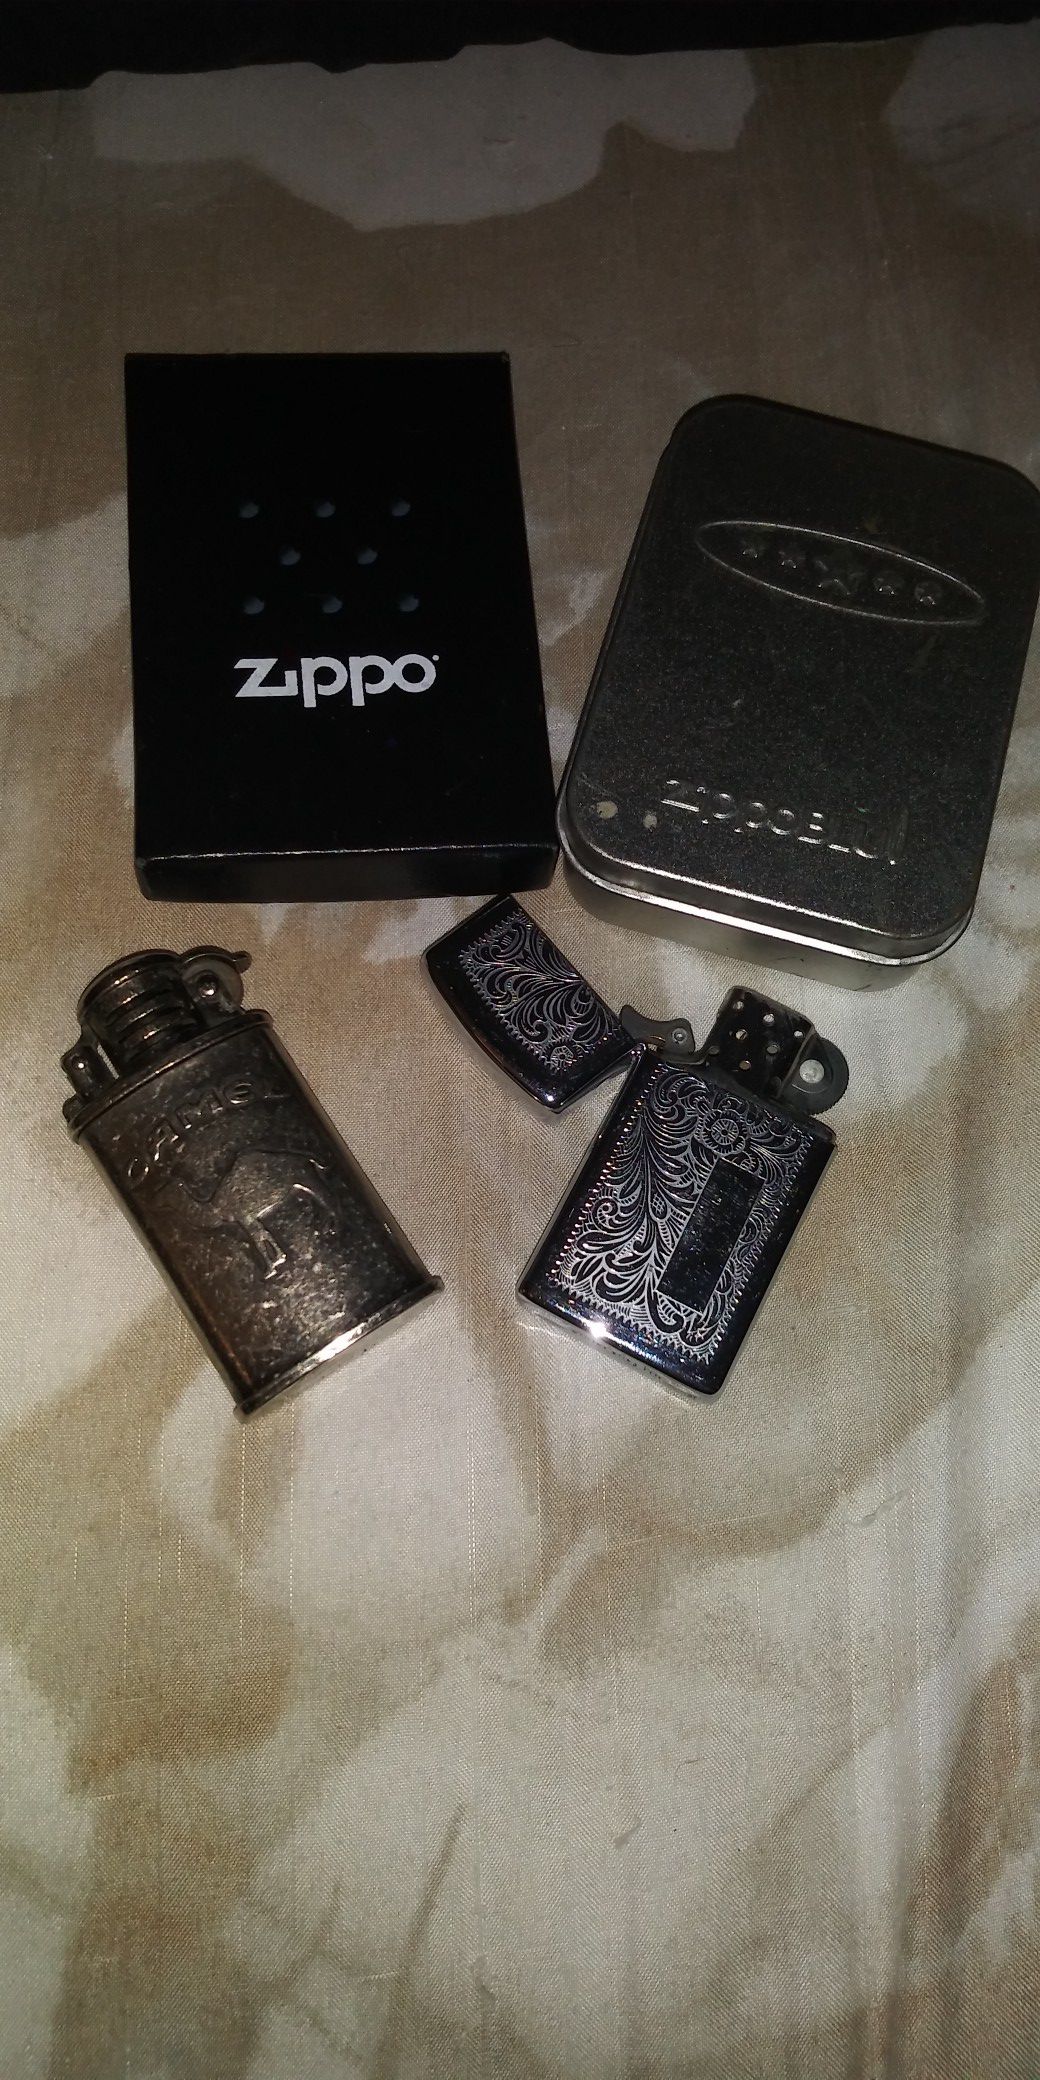 4 zippo lighters